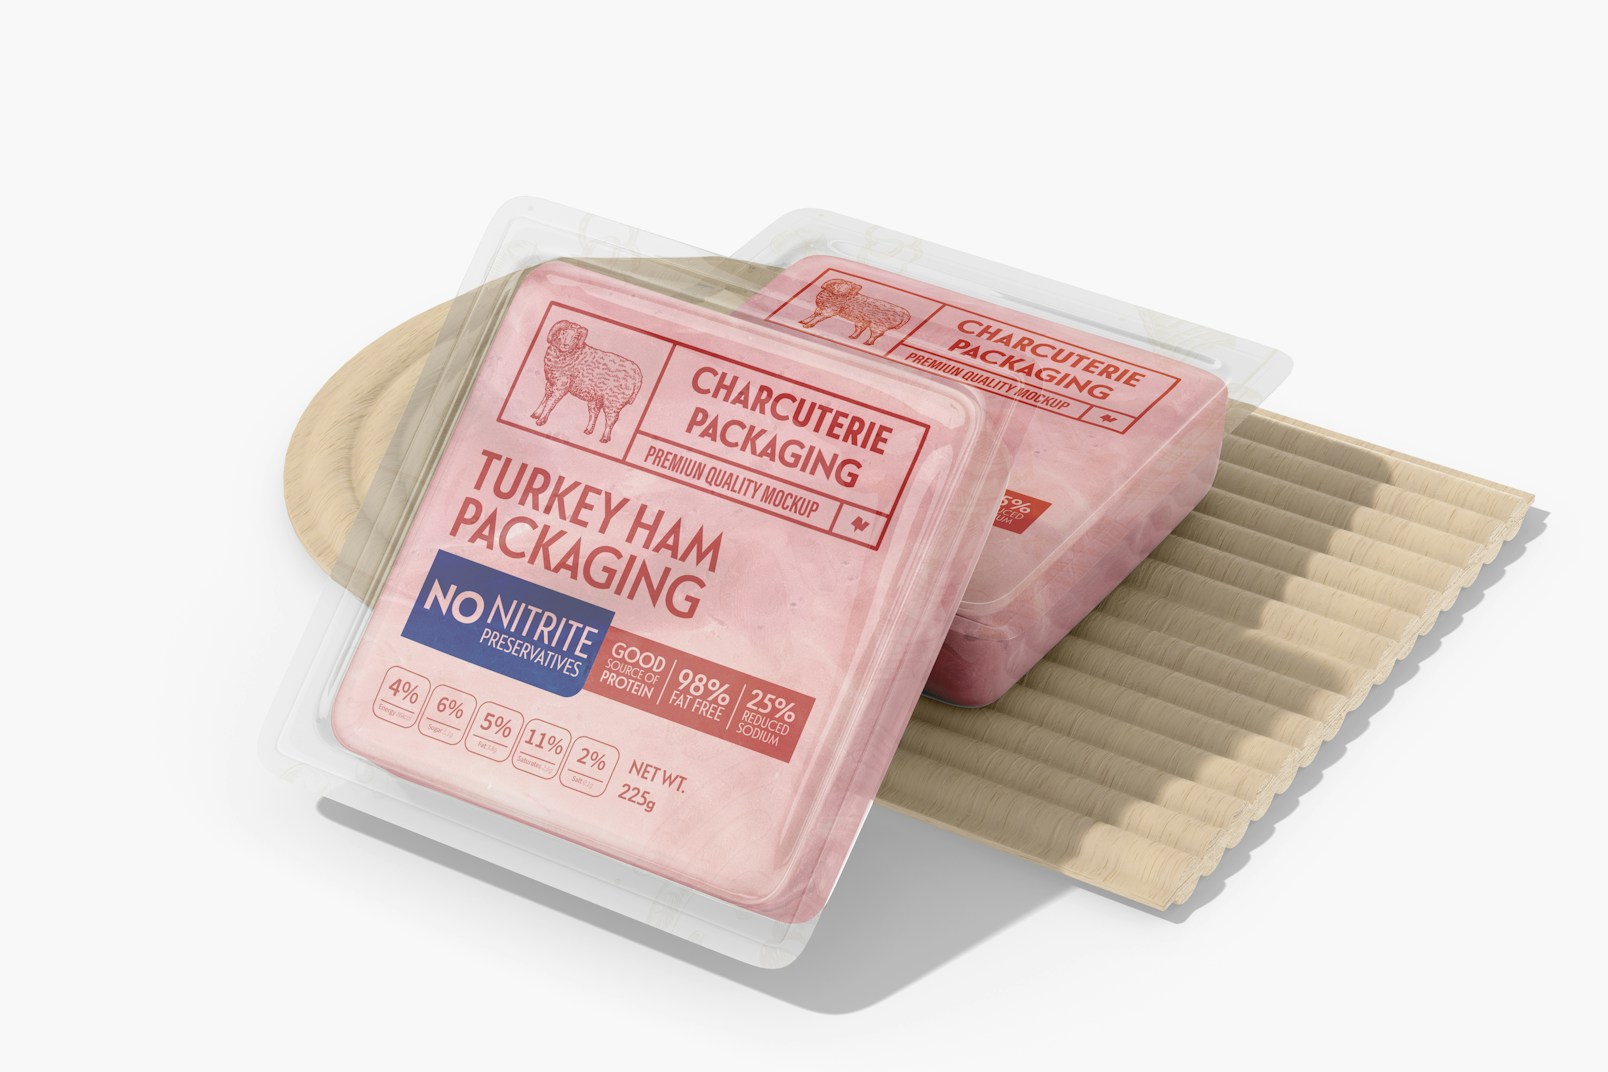 Turkey Ham Packaging Mockup, Perspective